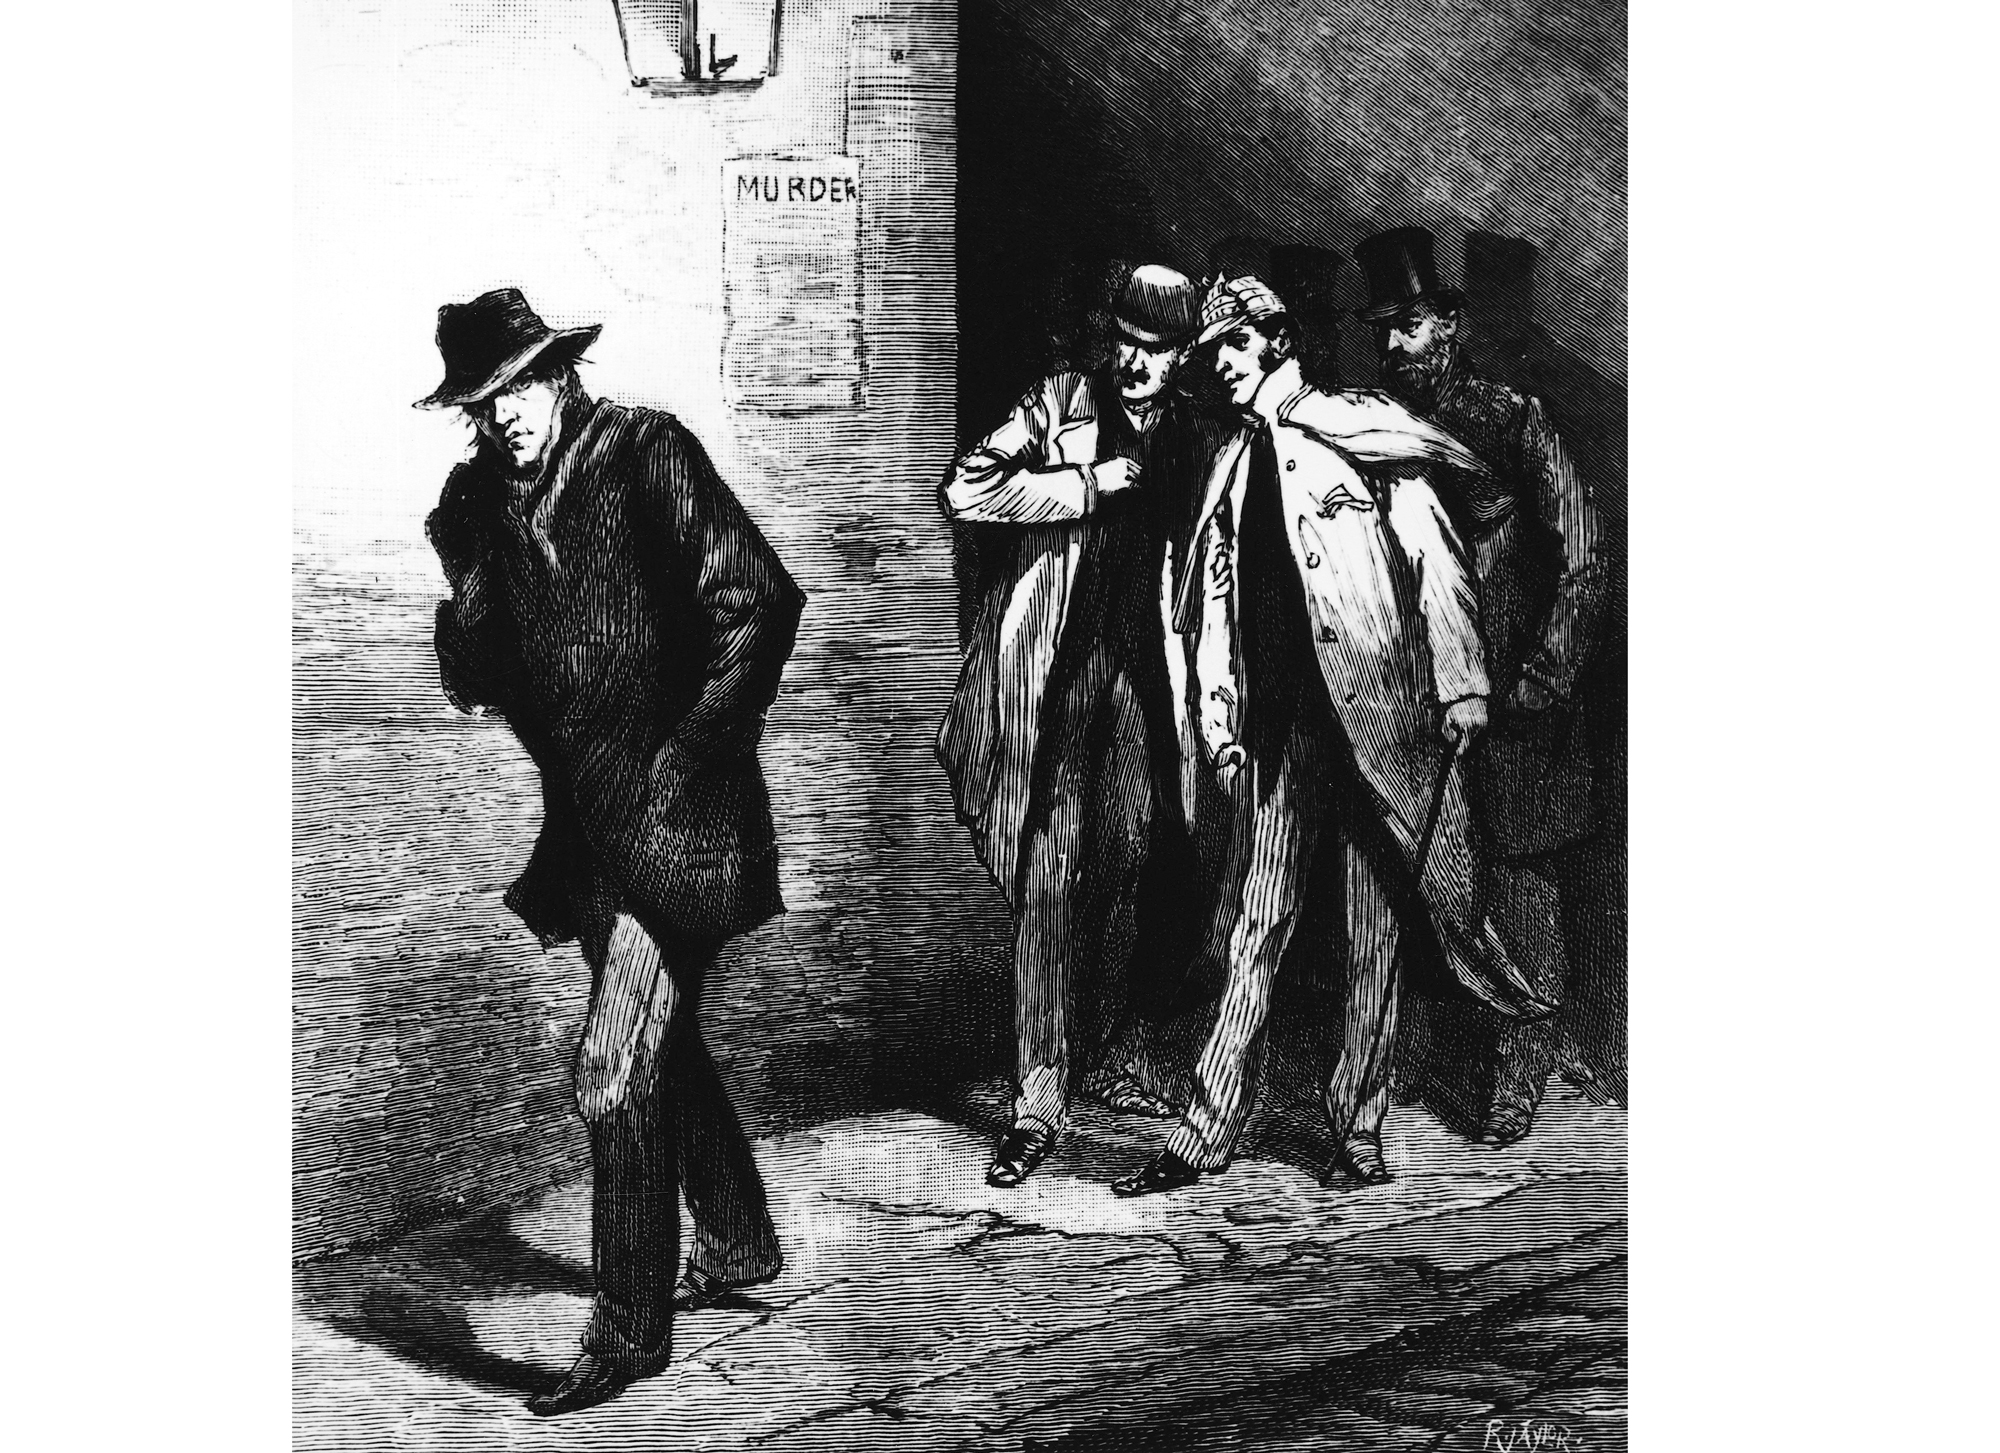 Полиция наблюдает за подозреваемым во времена Джека-потрошителя, Лондон, 1888 год, гравюра. Англия. Фото © Getty Images / DeAgostini